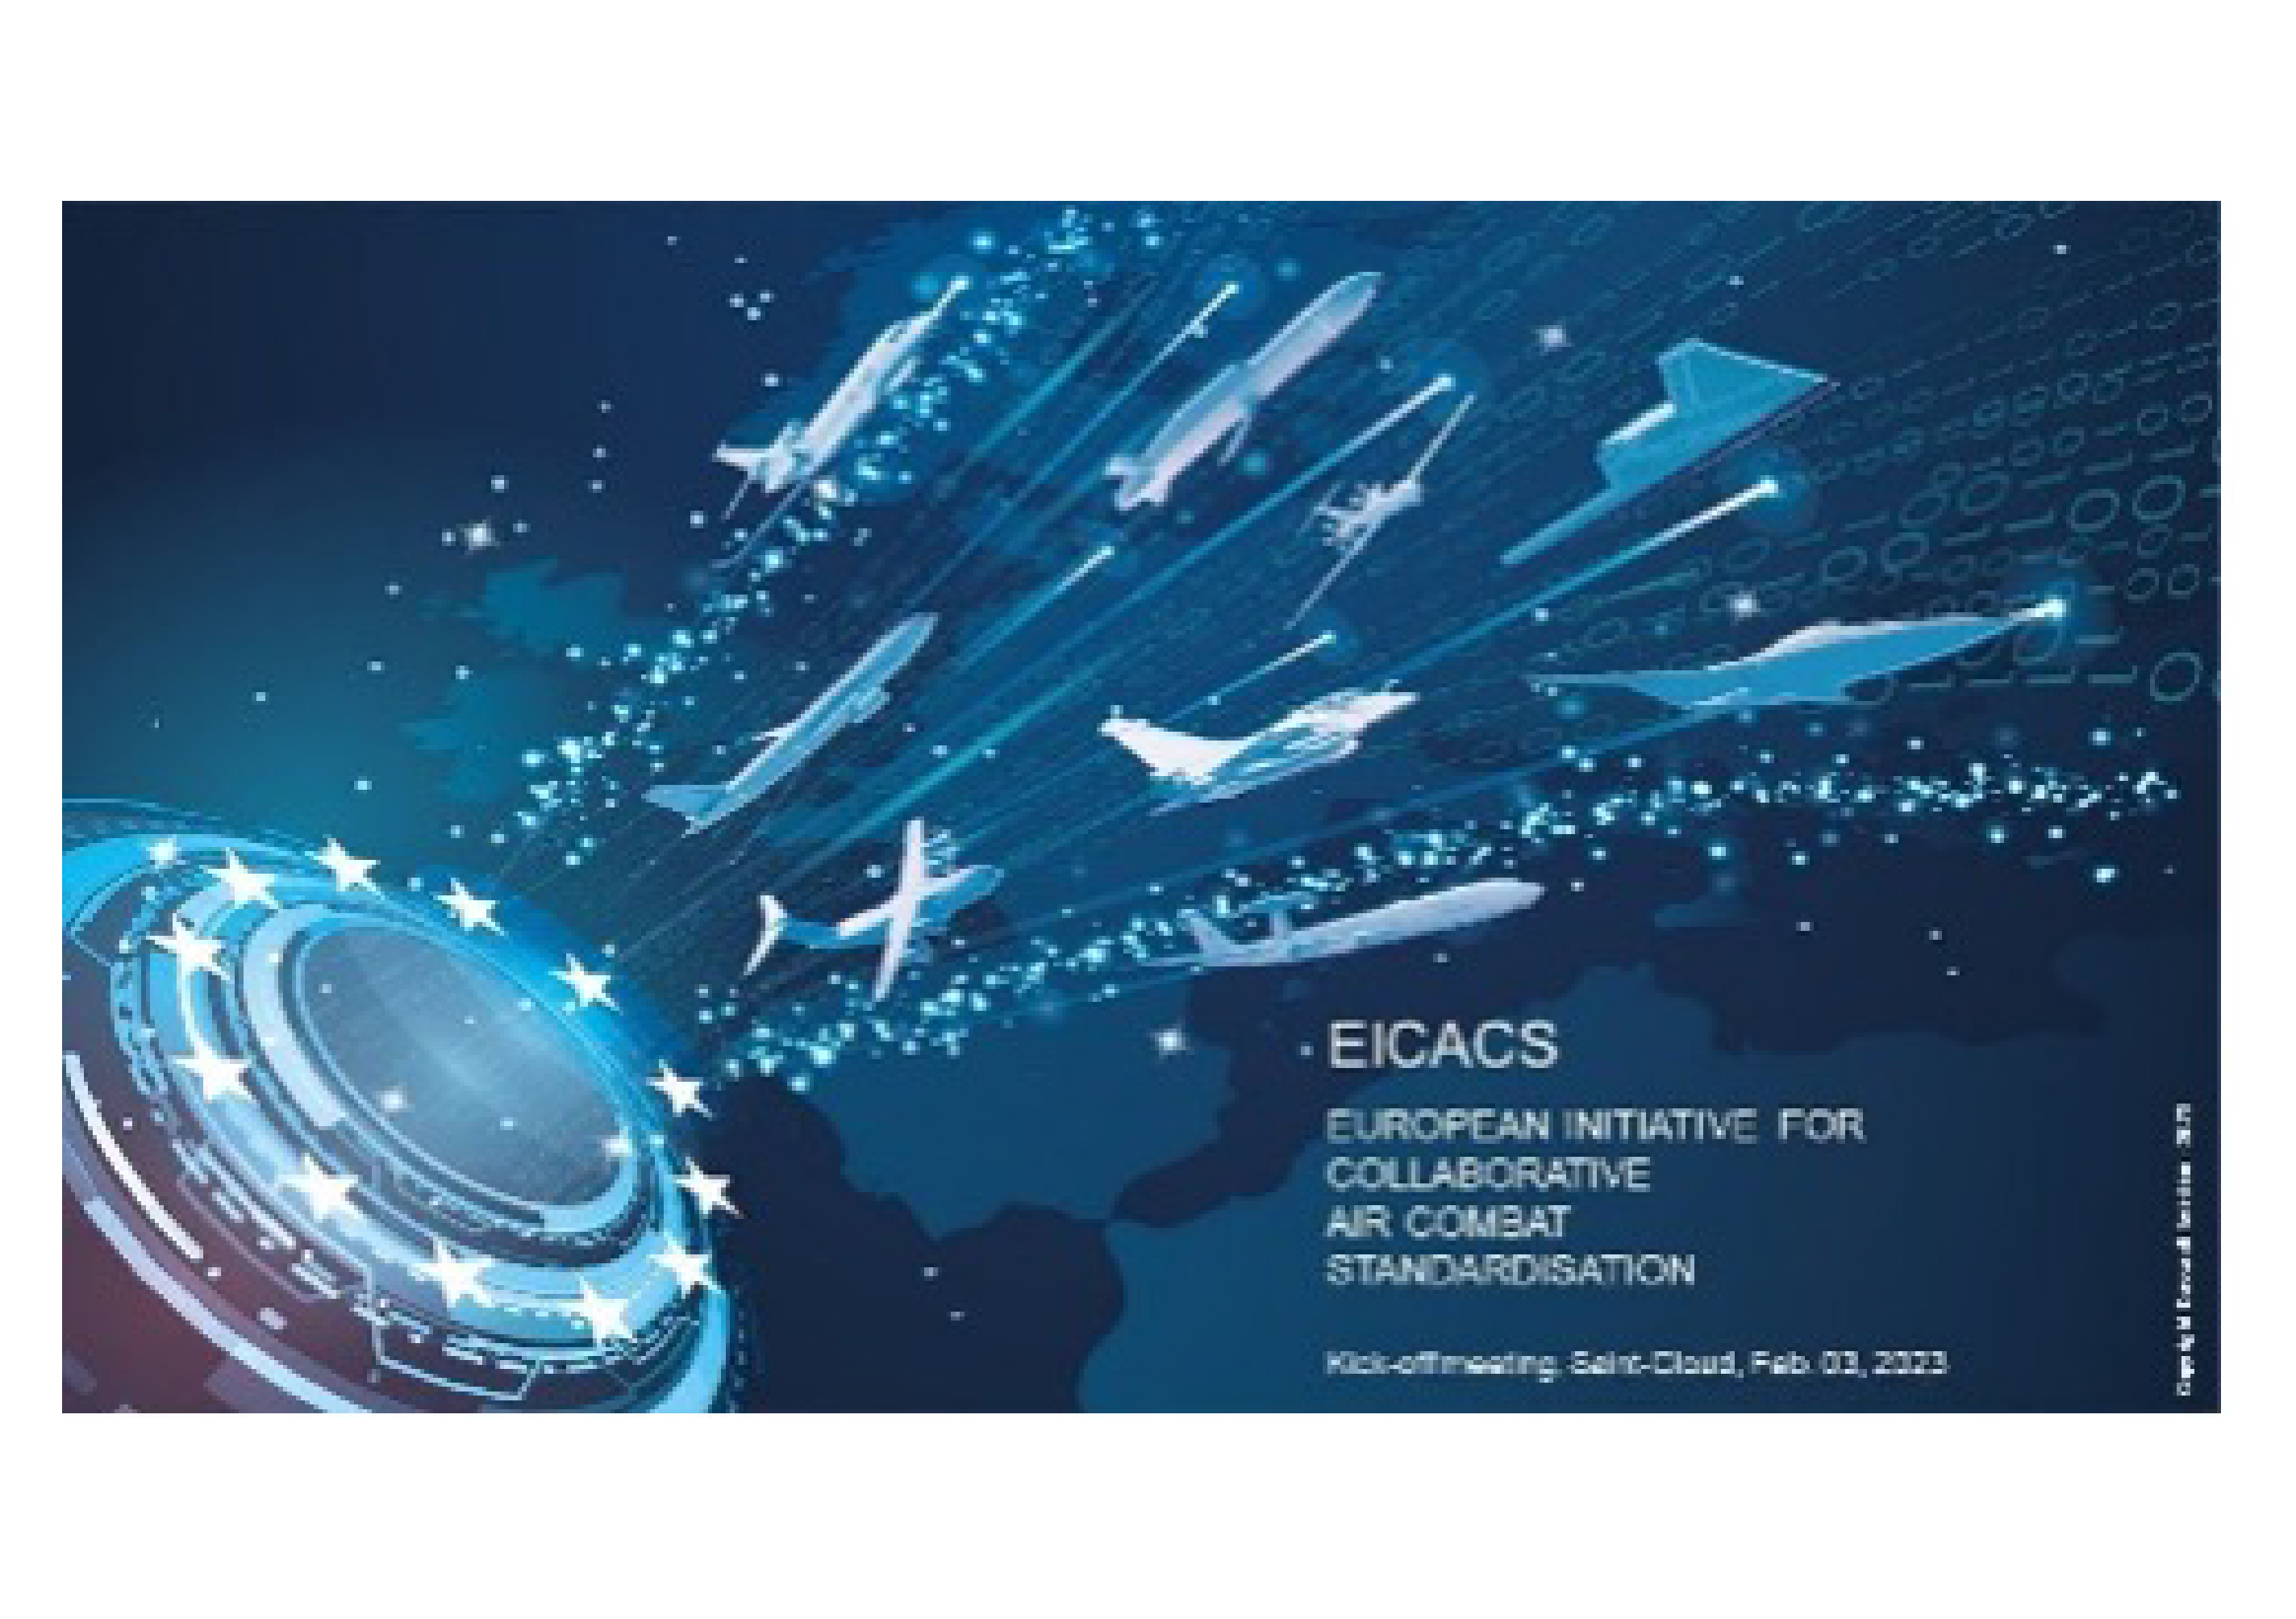 EICACS: European Initiative for CollaborativeAir Combat Standardisation